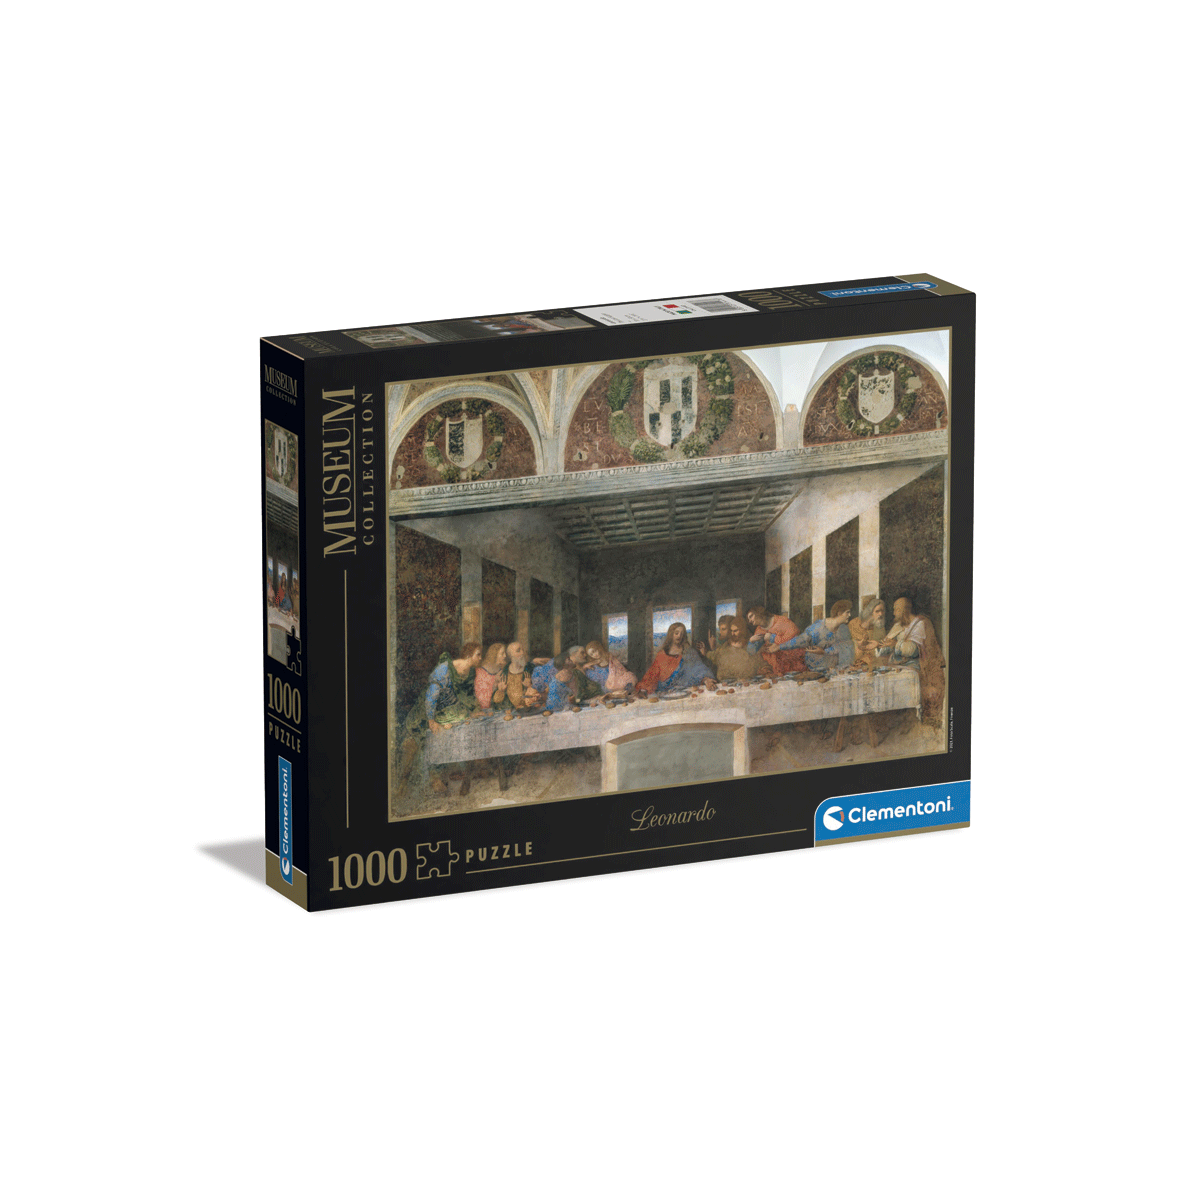 Clementoni puzzle museum collection leonardo, "the last supper" - 1000 pezzi, puzzle adulti - CLEMENTONI